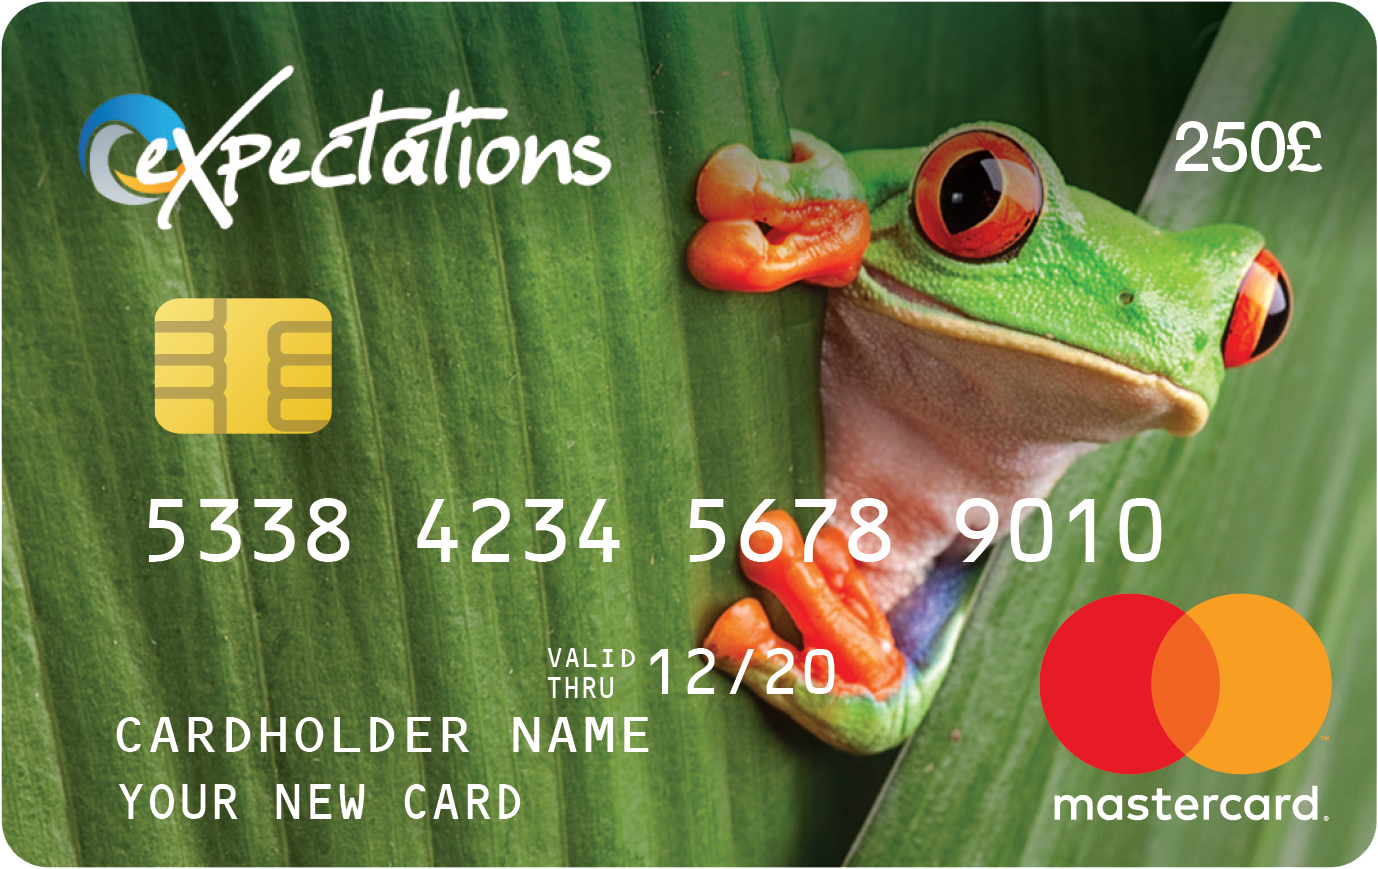 Expectations Prepaid Mastercard